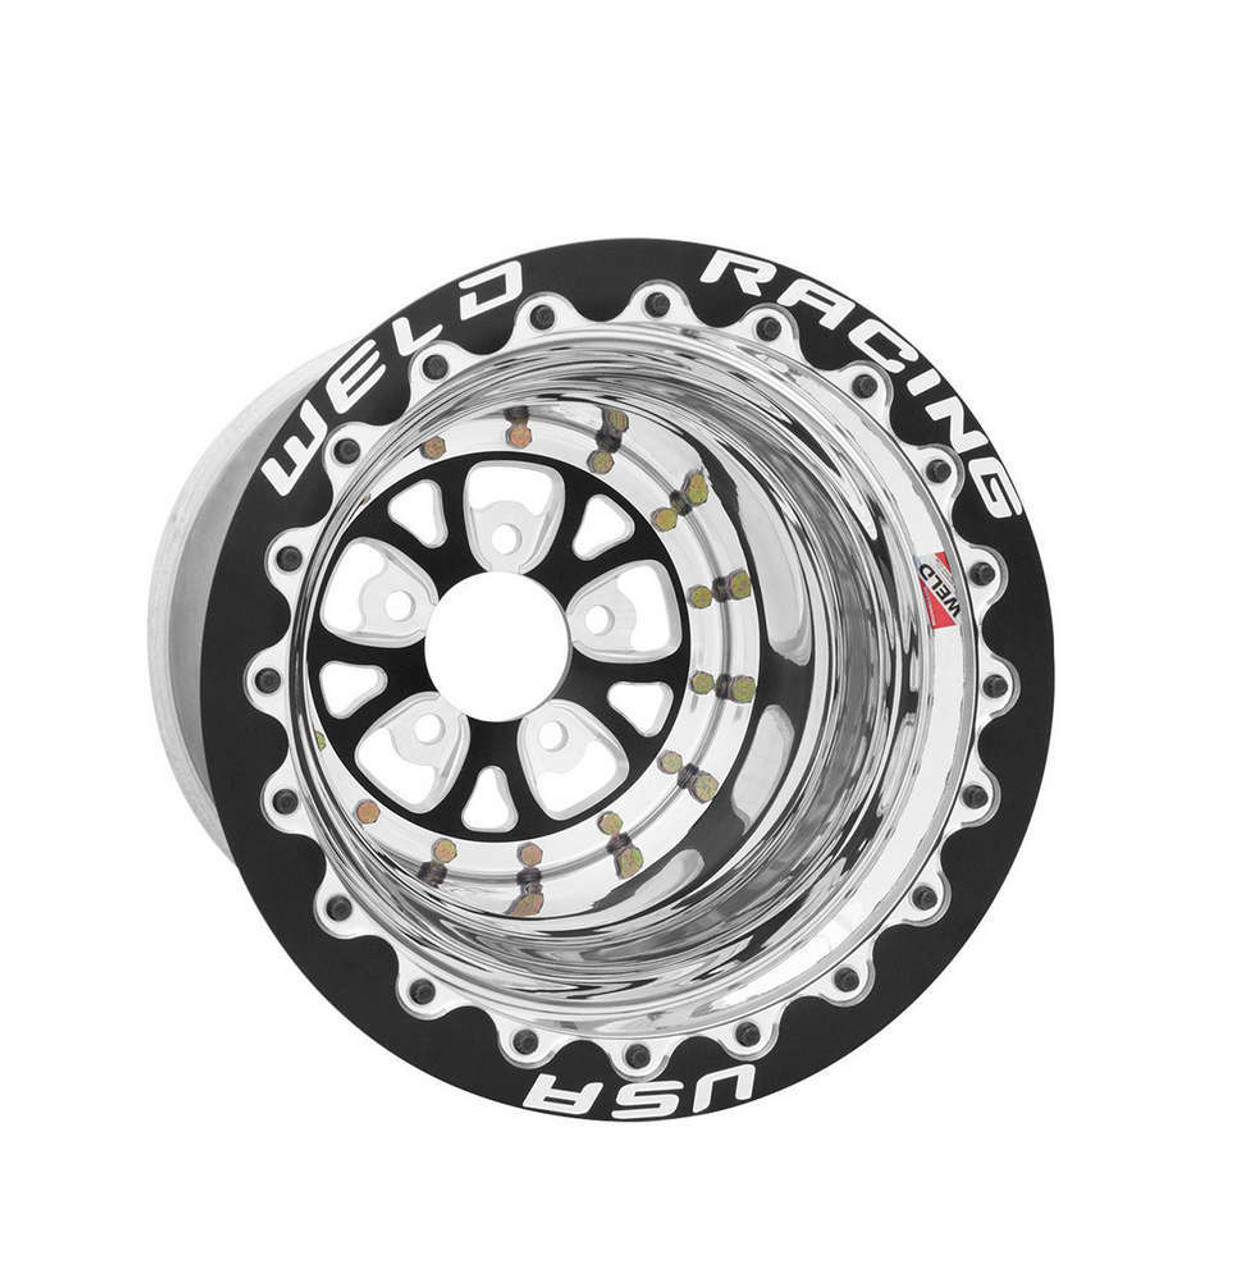 V-Series Drag Wheel Blk 15x14 5x4.75 BC 5.0 BS WEL84B-514280CB